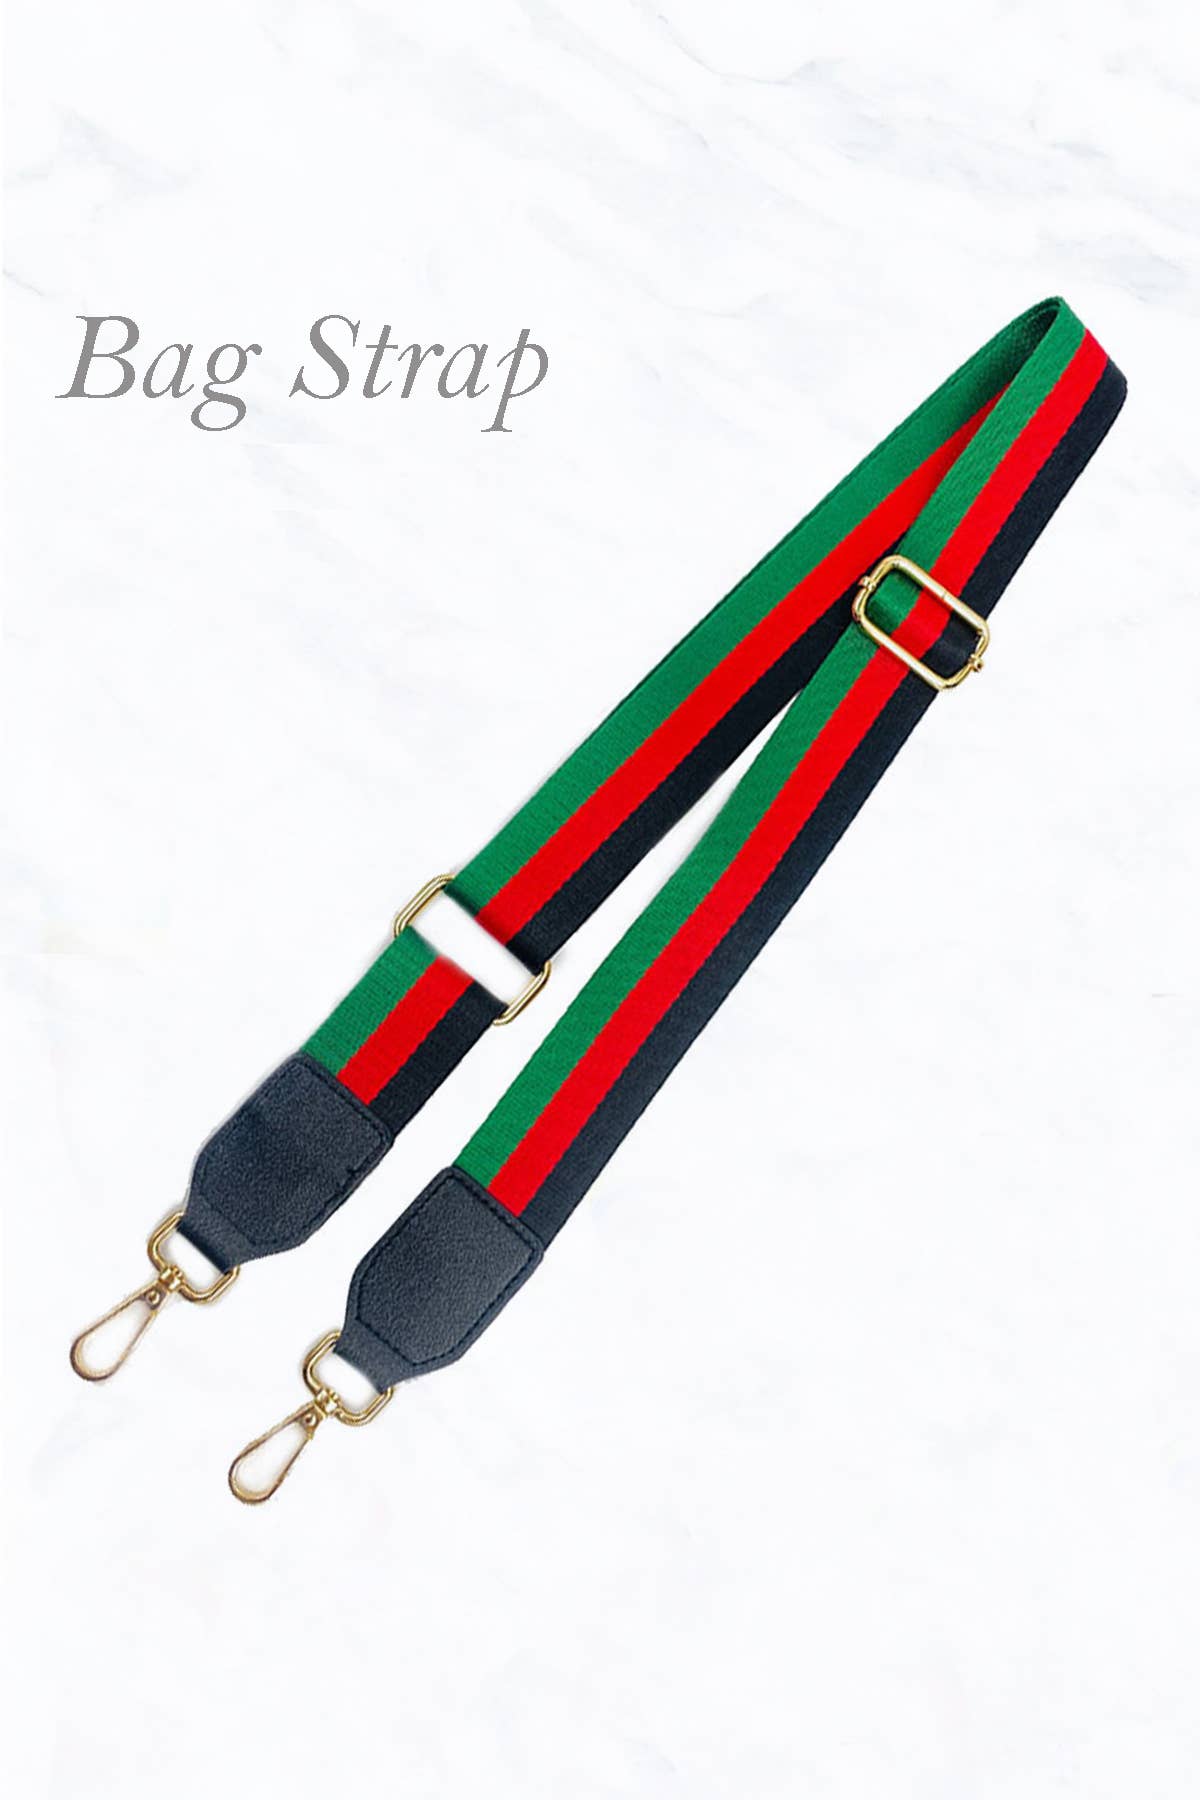 Red & Green Bag Strap